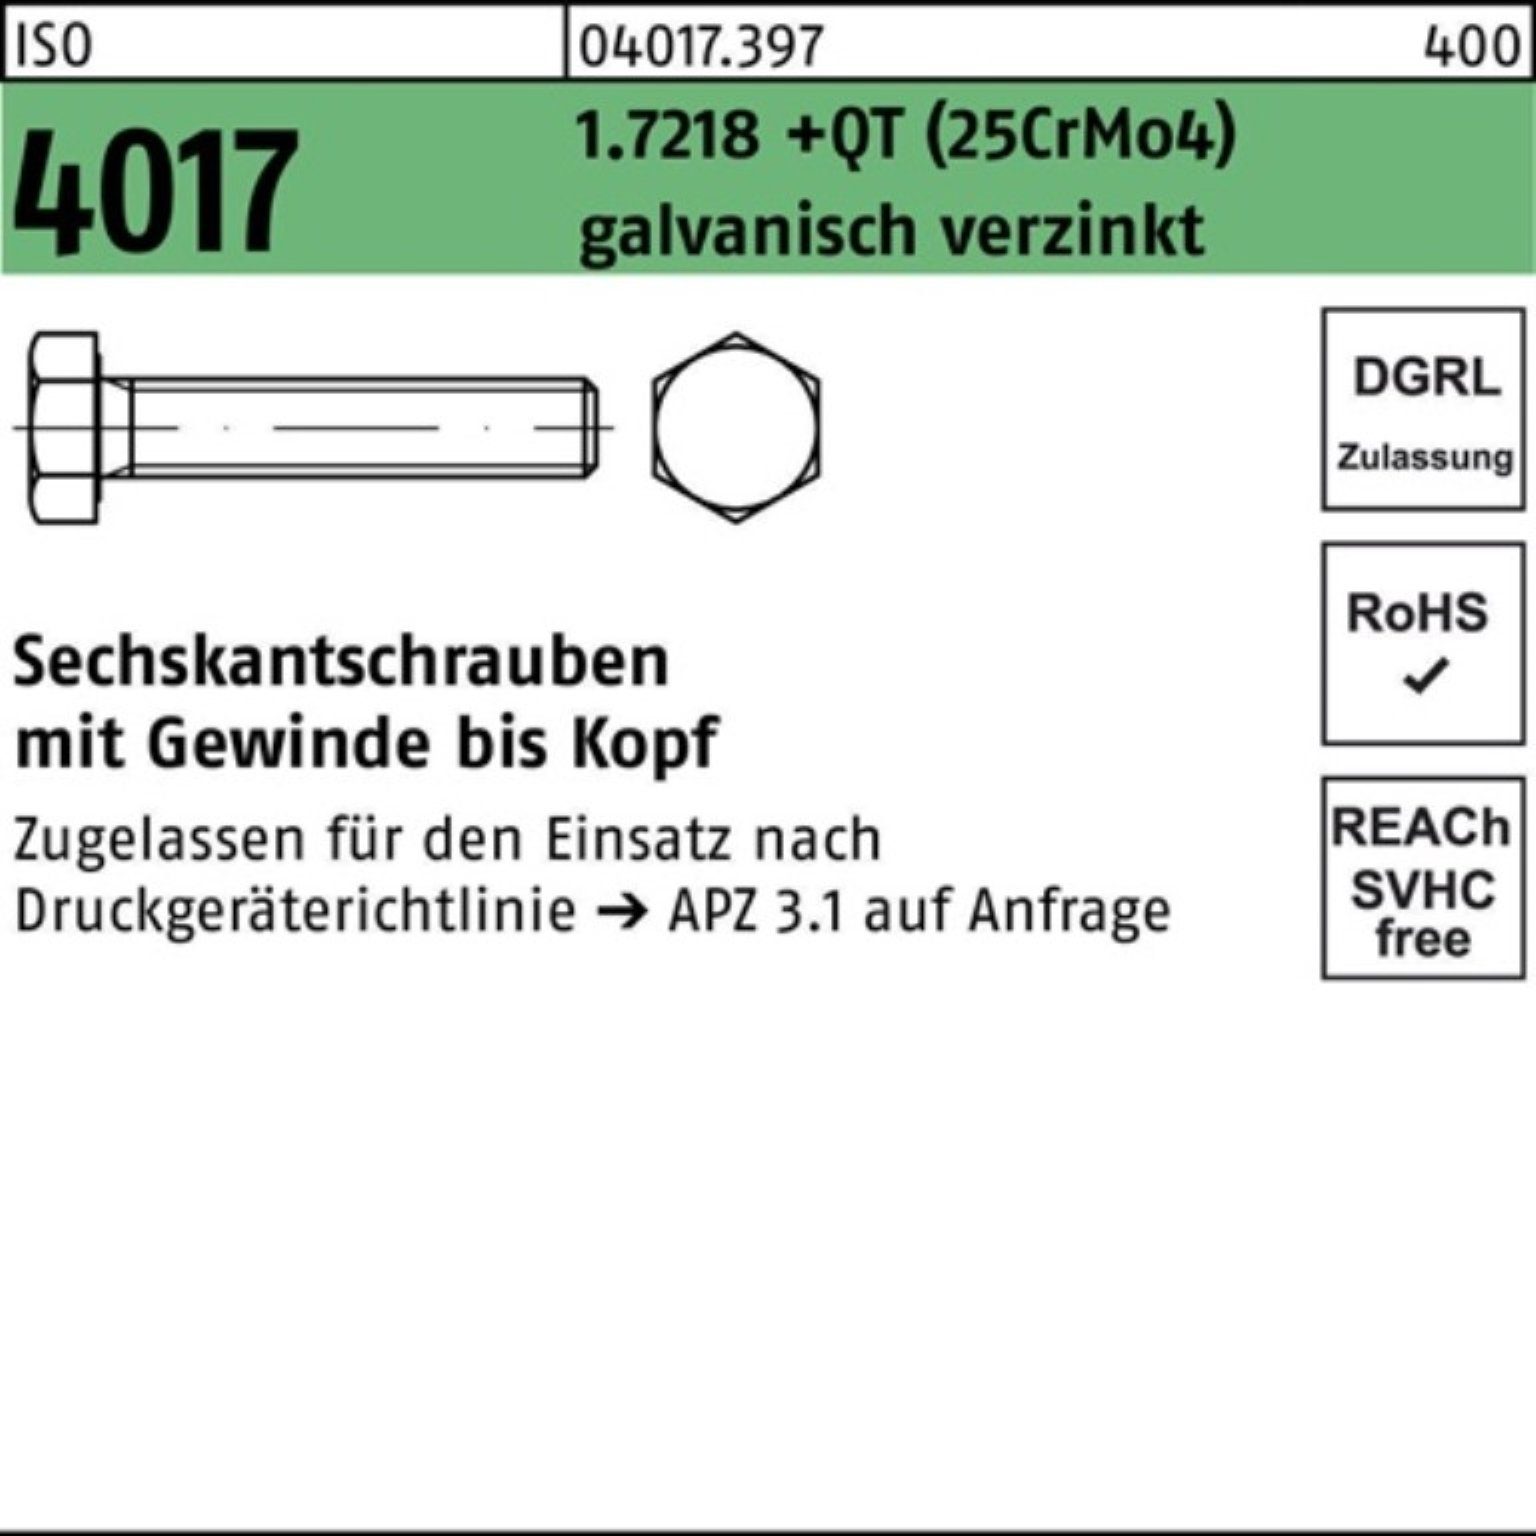 Bufab Sechskantschraube 100er Pack Sechskantschraube +QT 1.7218 ISO g VG (25CrMo4) M20x45 4017